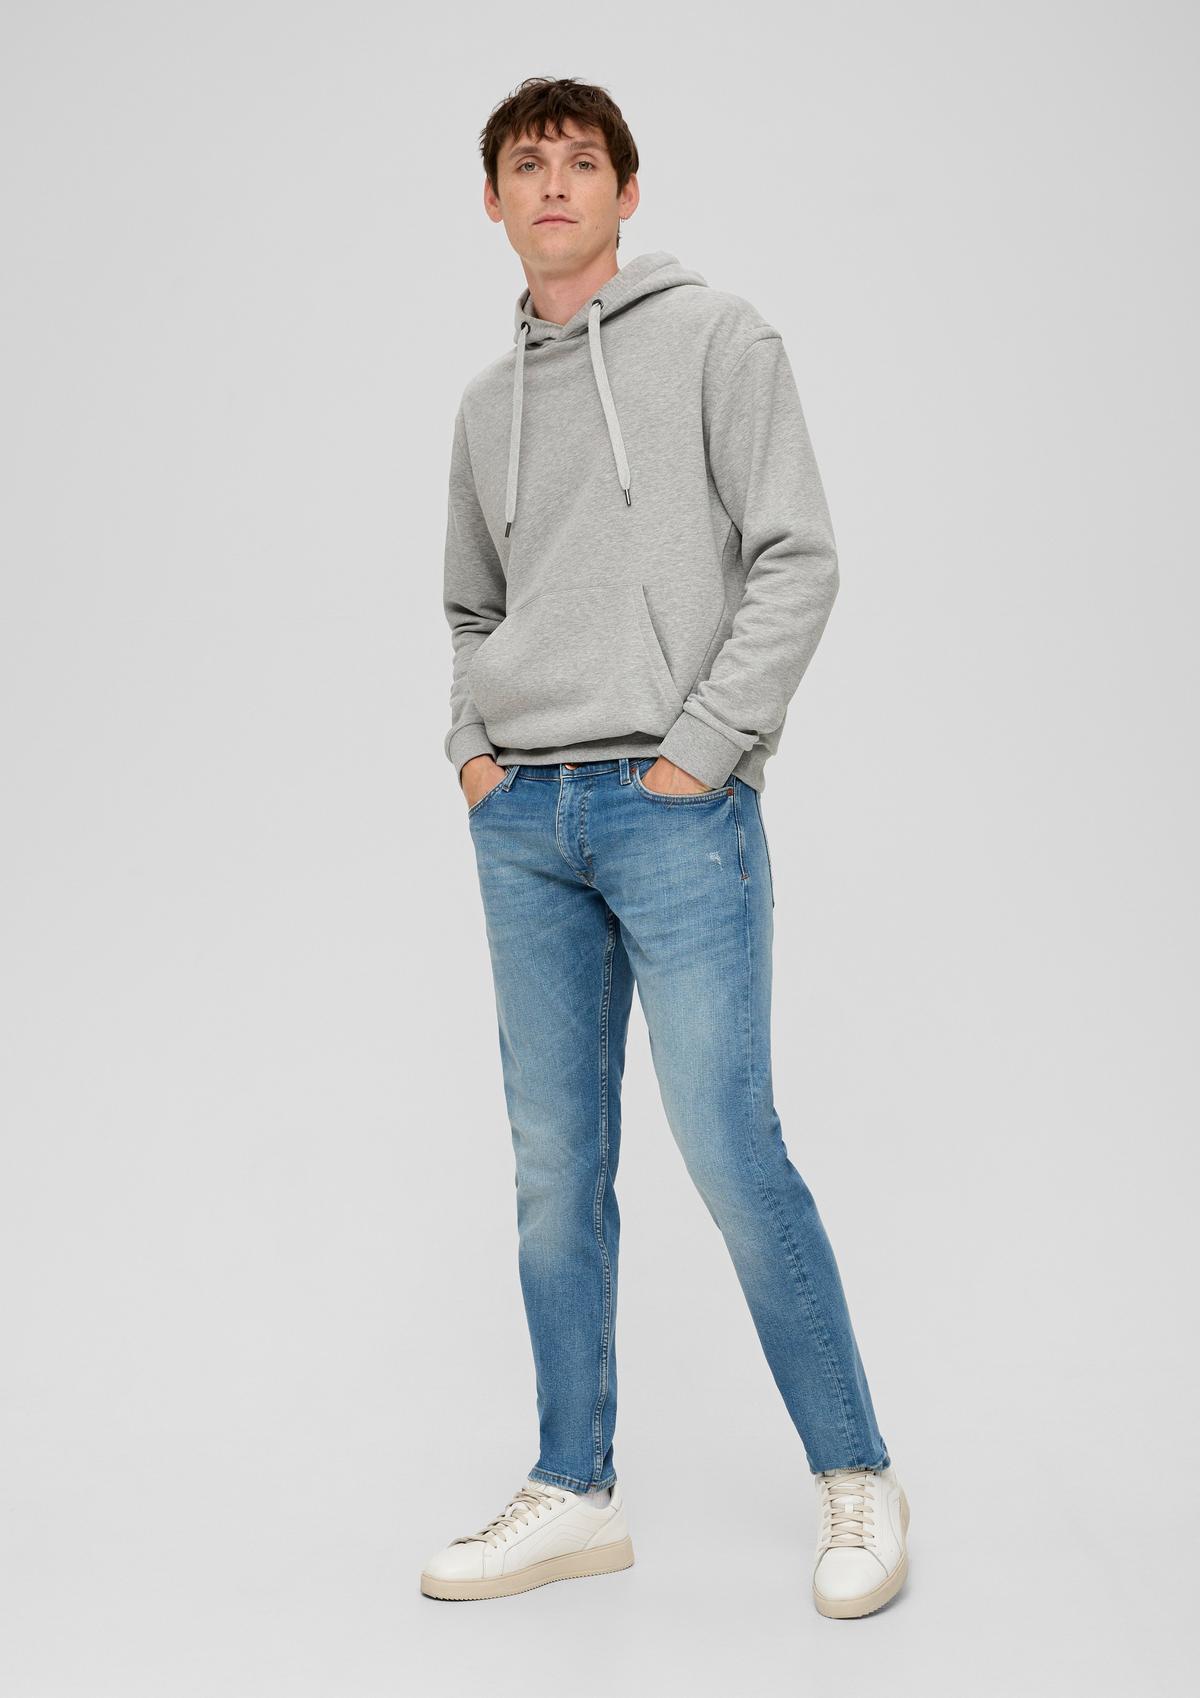 s.Oliver Jeans Rick / slim fit / mid rise / slim leg